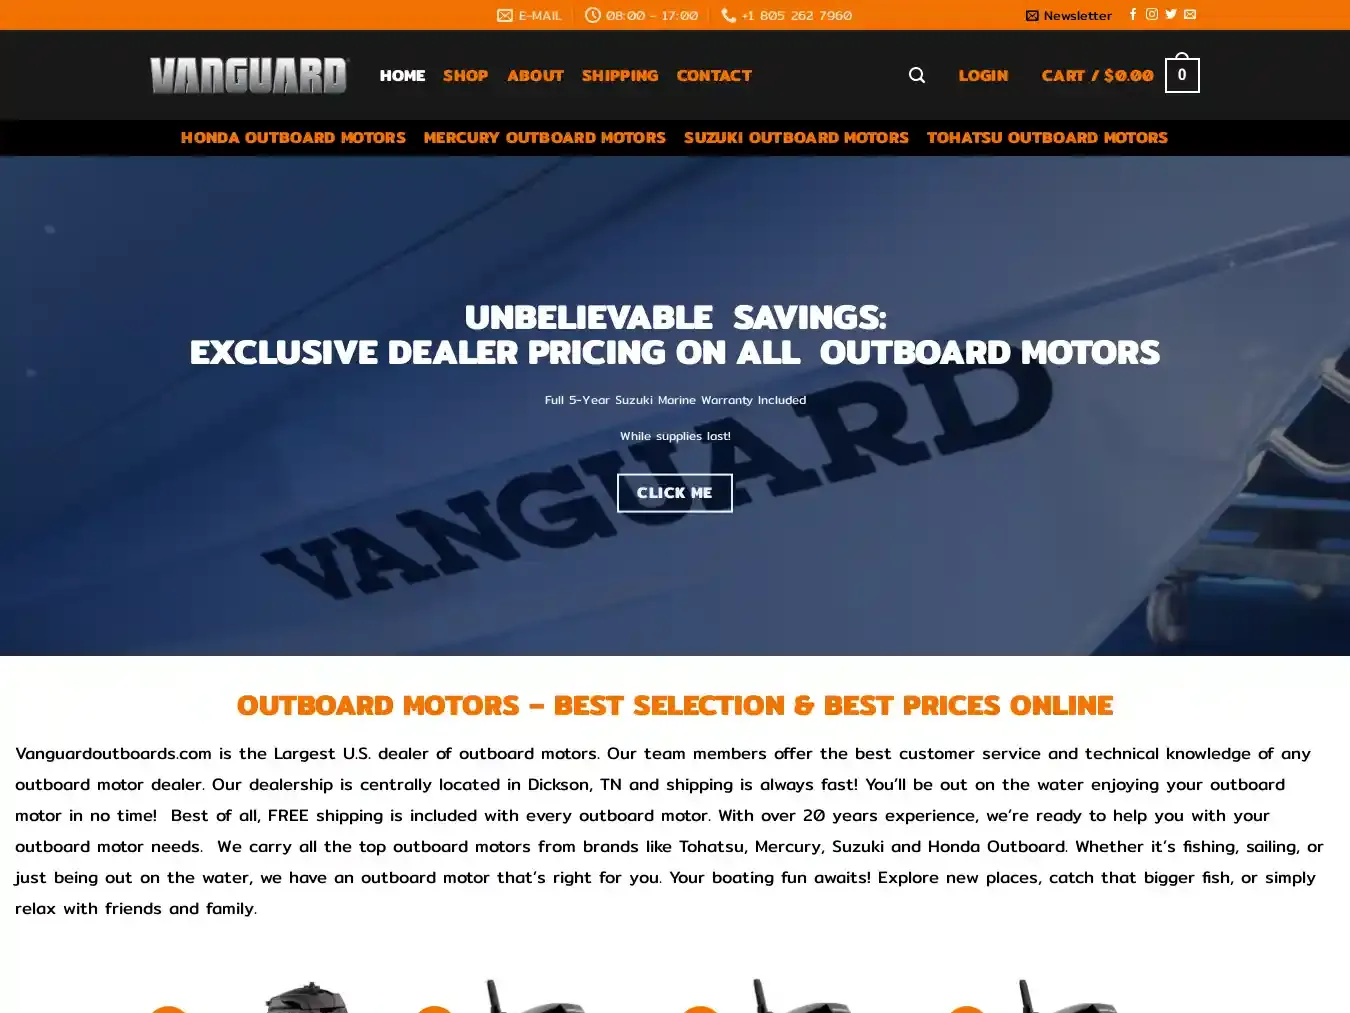 Vanguardoutboards.com Fraudulent Automobile website.